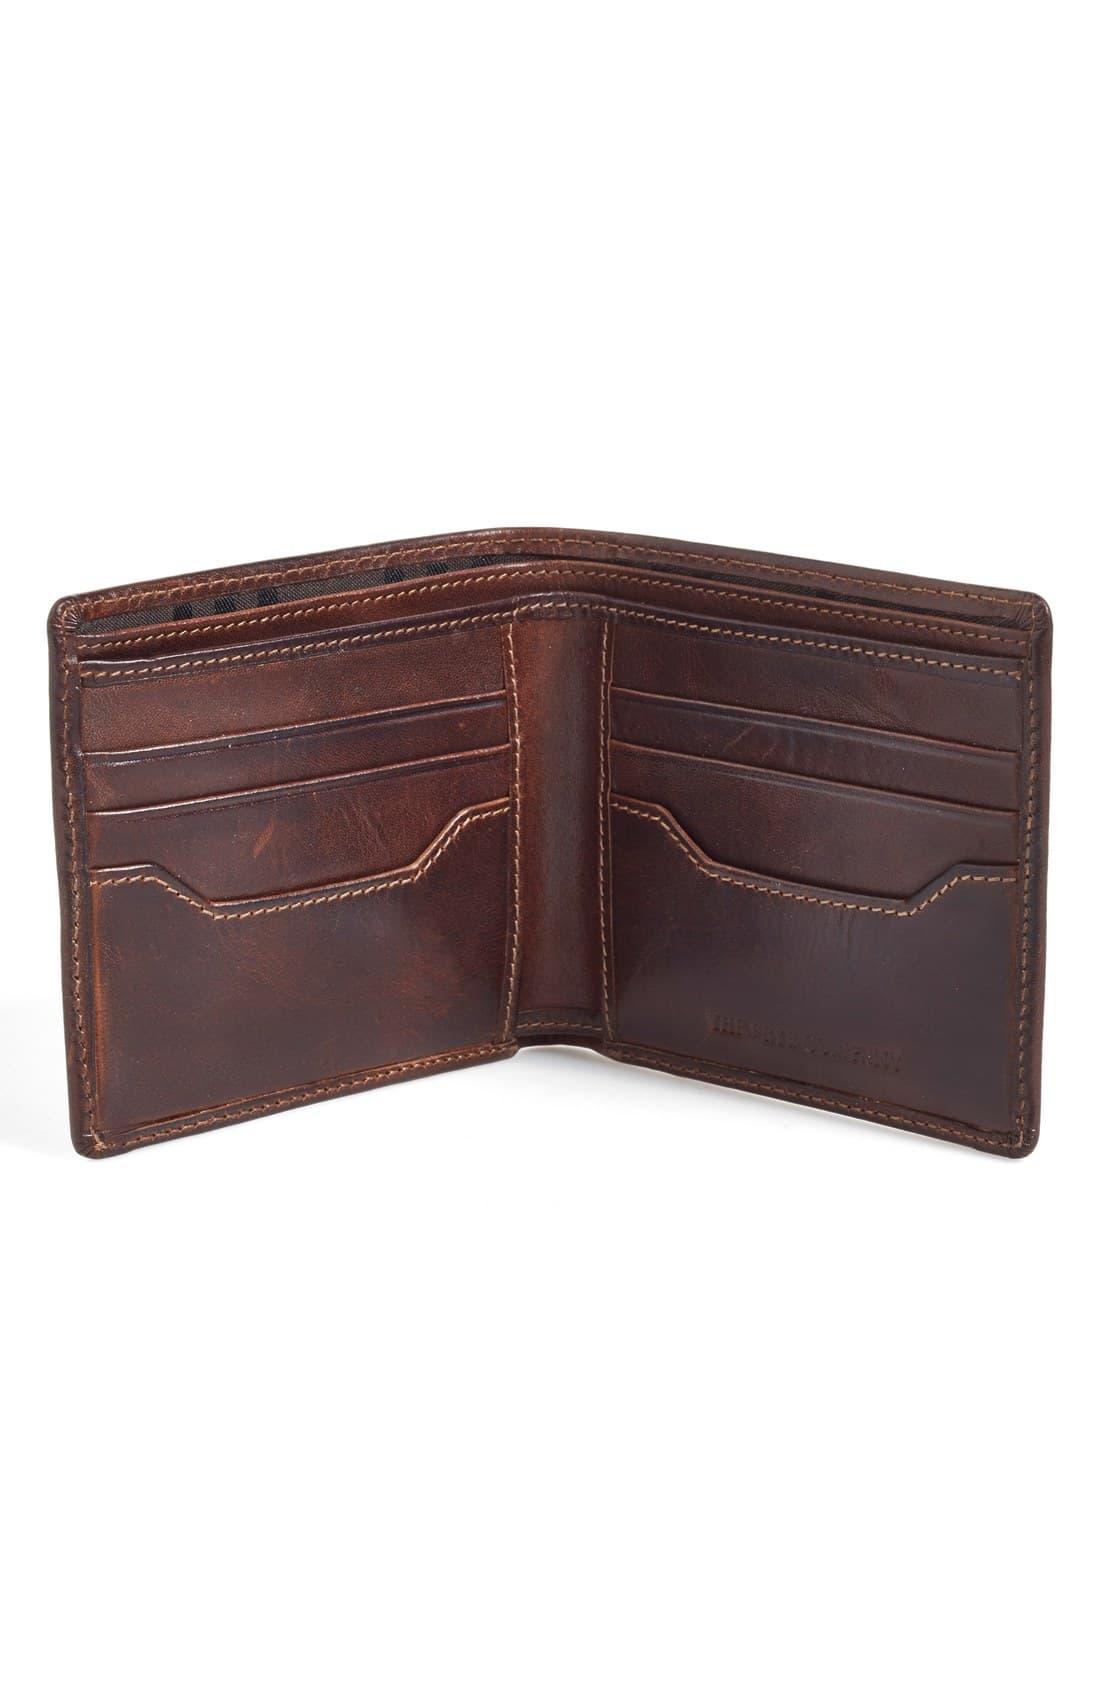 Frye &#39;logan&#39; Leather Billfold Wallet in Dark Brown (Brown) for Men - Lyst